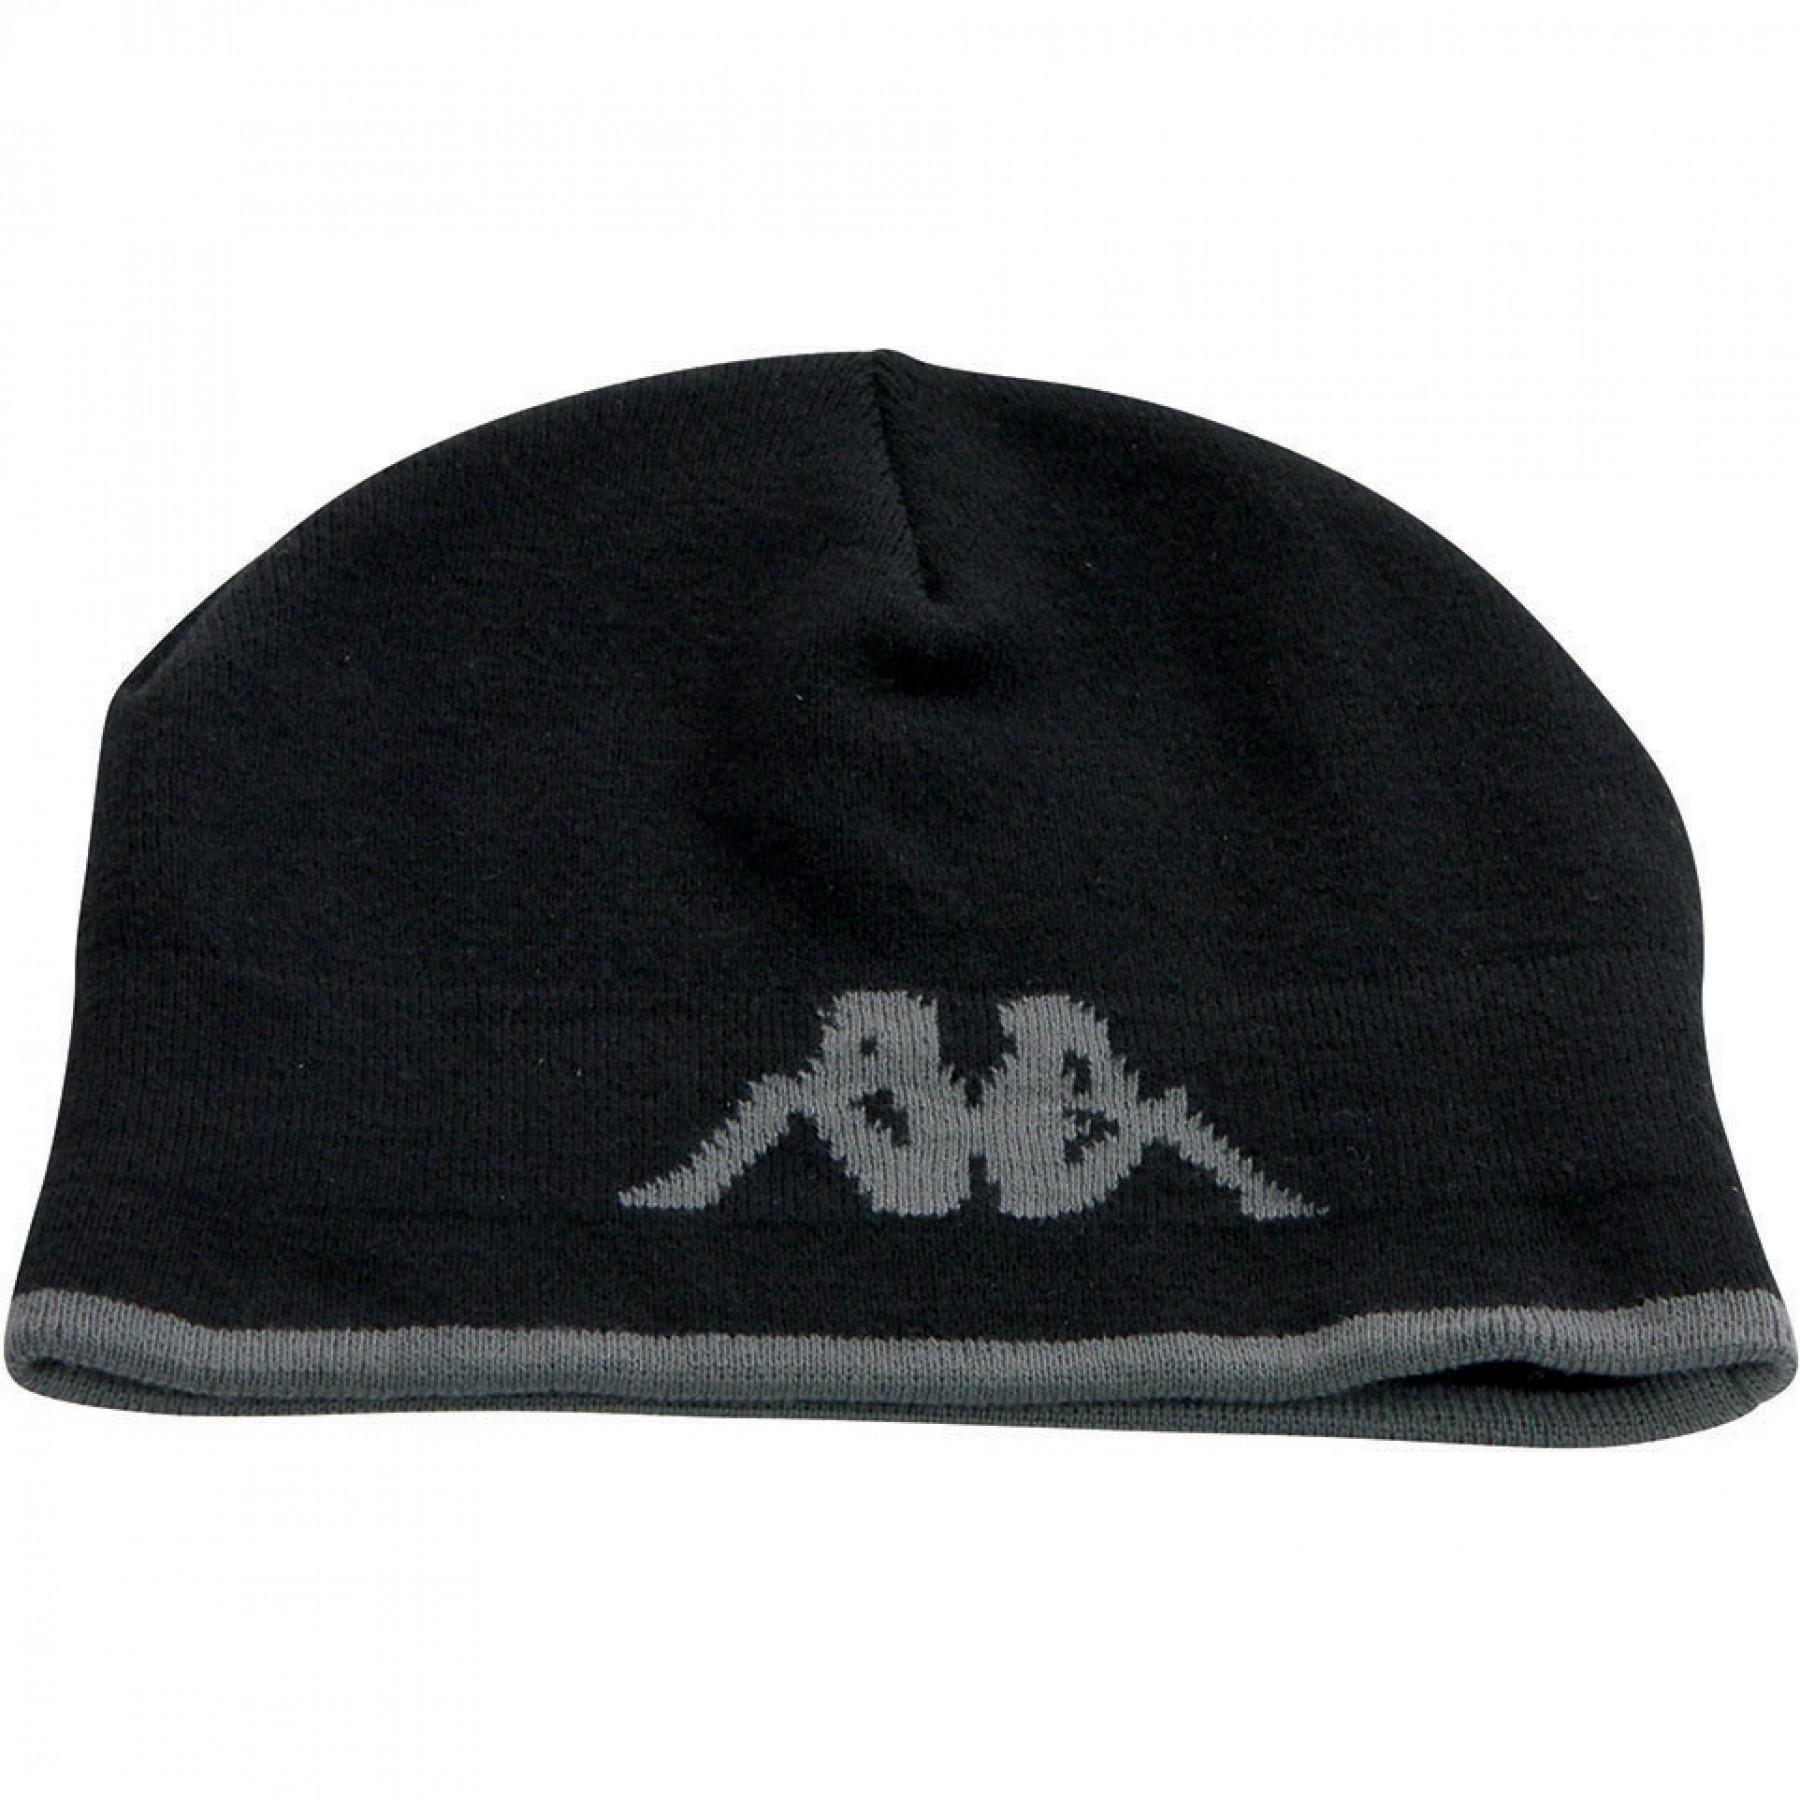 Set of 5 hats Kappa Asma